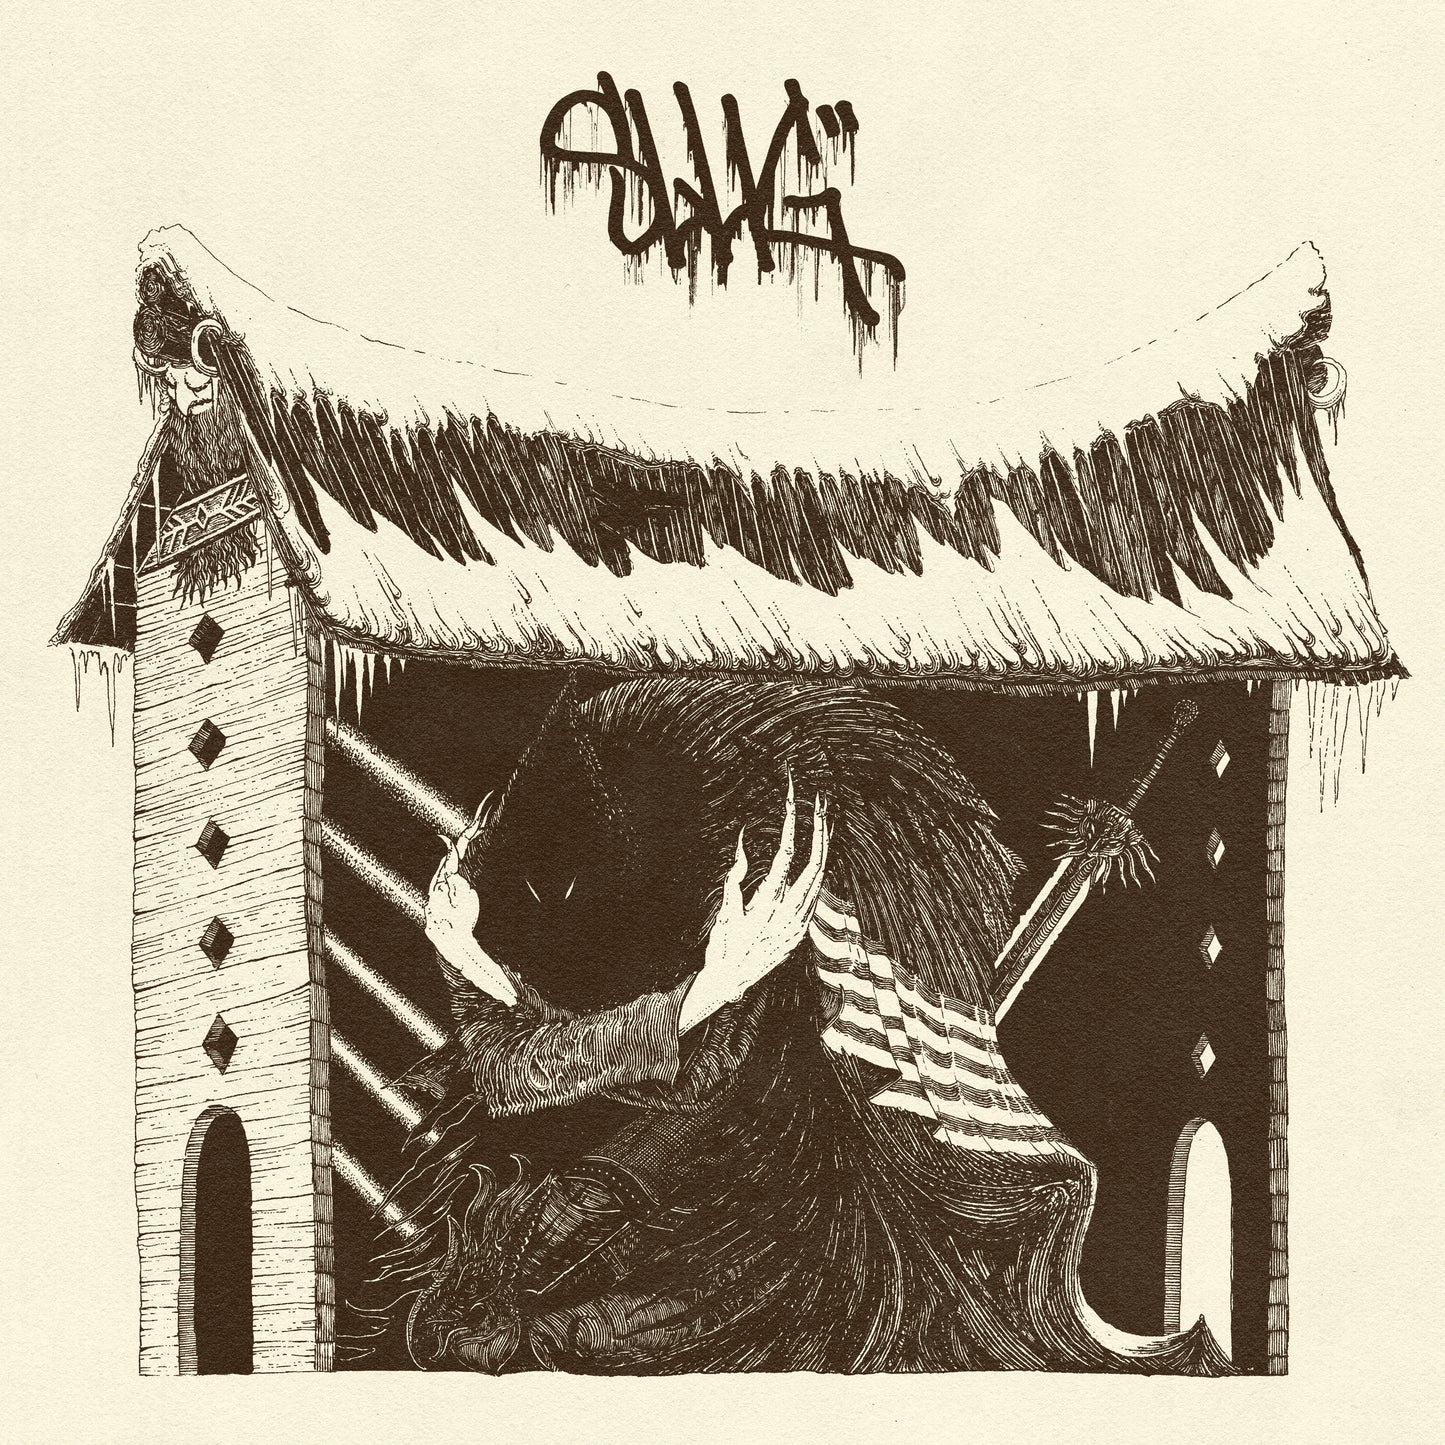 Slug "Continuing Growth" EP